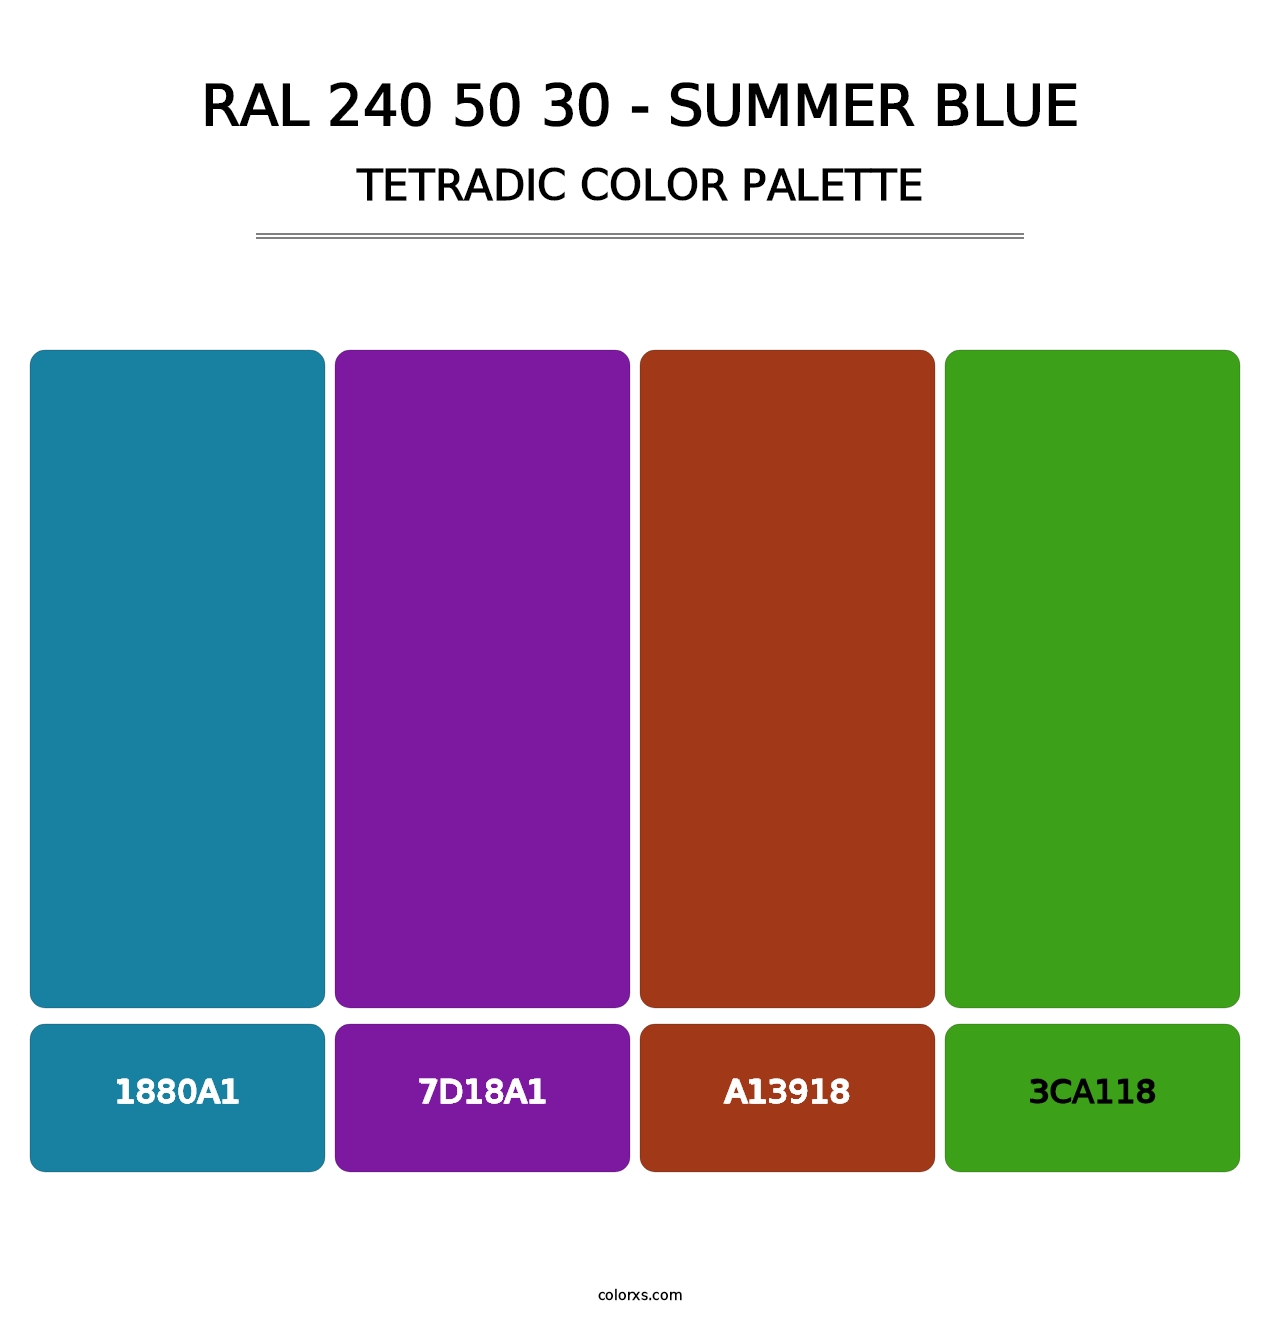 RAL 240 50 30 - Summer Blue - Tetradic Color Palette